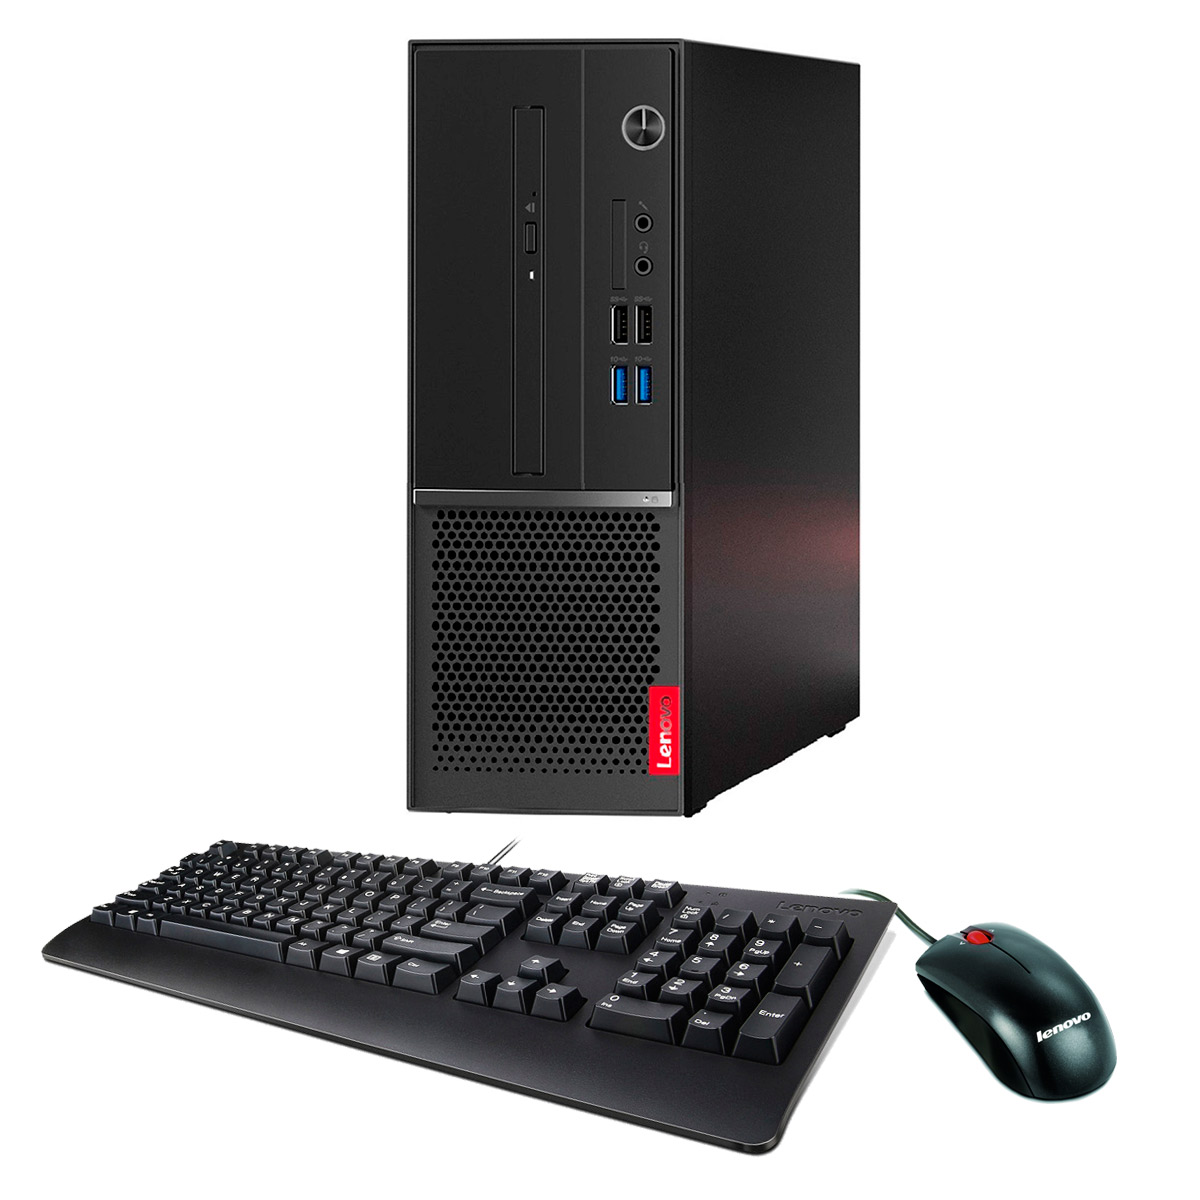 Computador Lenovo V530S SFF - Intel i5 8400, 8GB, HD 1TB + SSD 240GB, Kit Teclado e Mouse, Windows 10 Pro - 10TXA01CBP